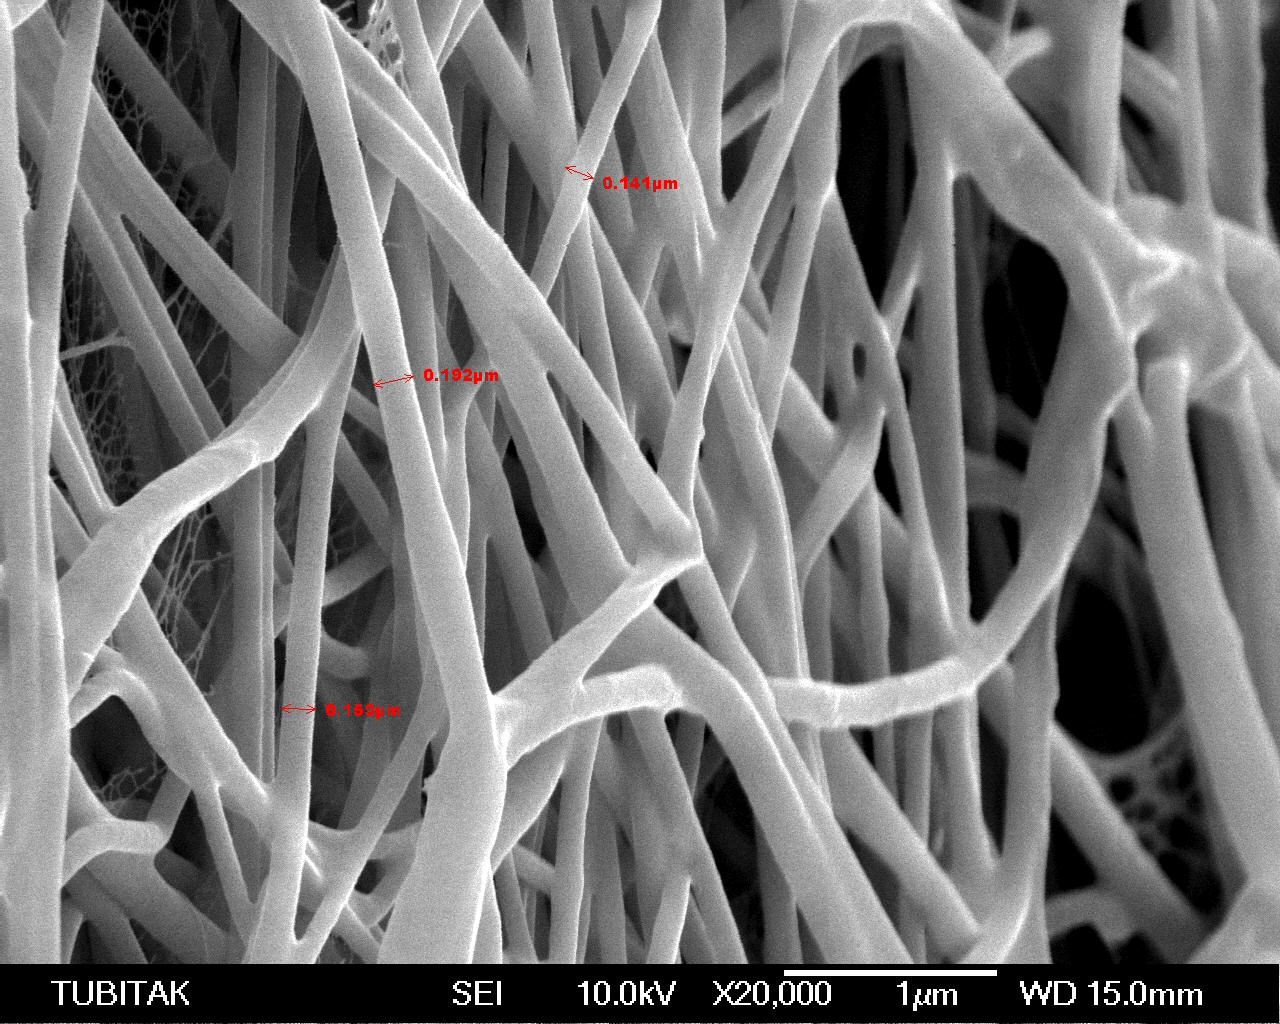 Nano-fibers